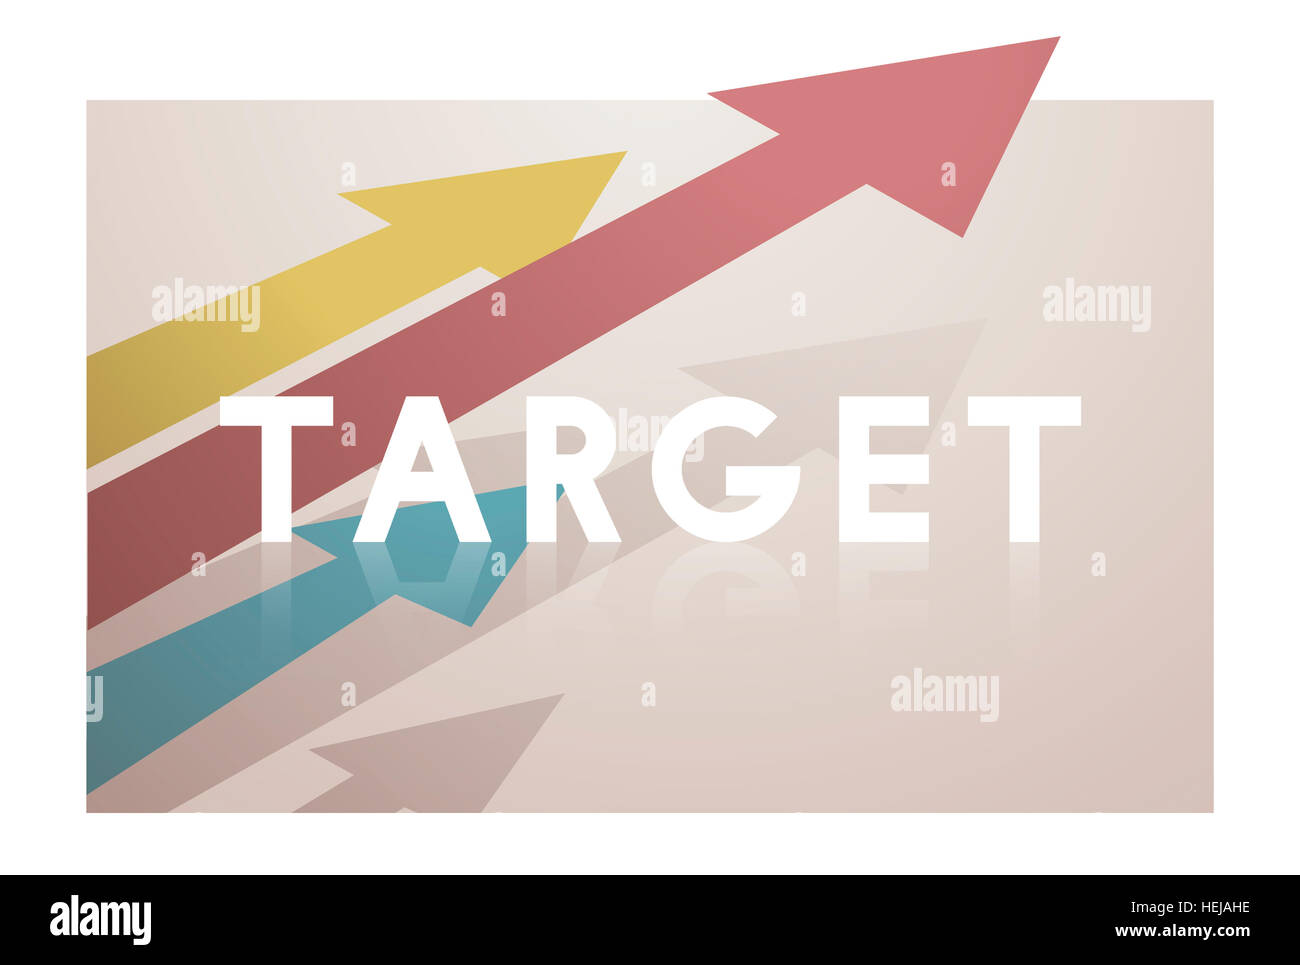 Target Improvement Challenge Icon Concept Stock Photo